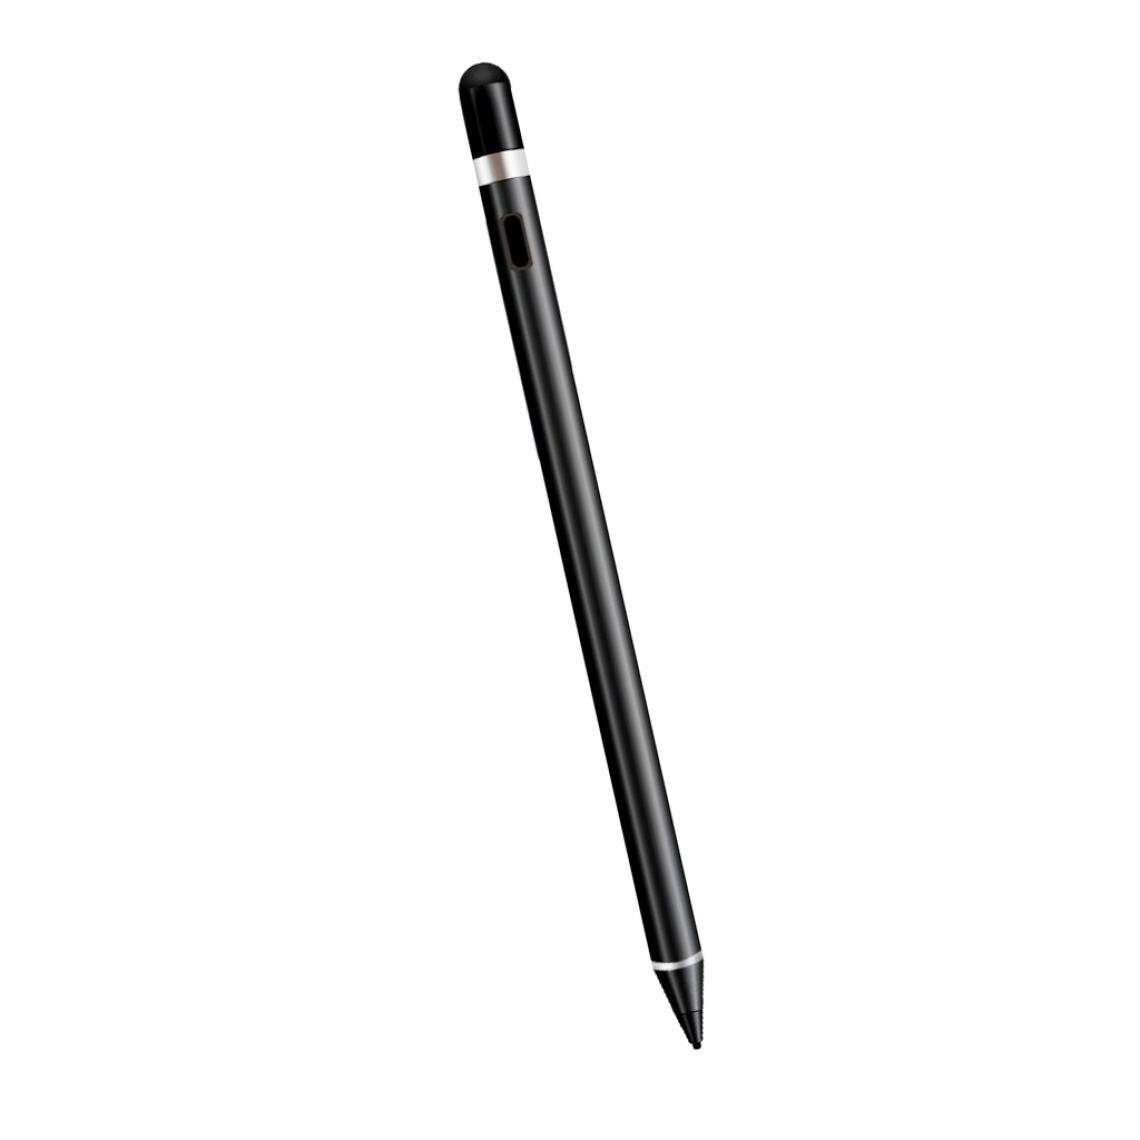 marque generique - Écran capacitif actif rechargeable stylo dessin stylo universel blanc - Clavier